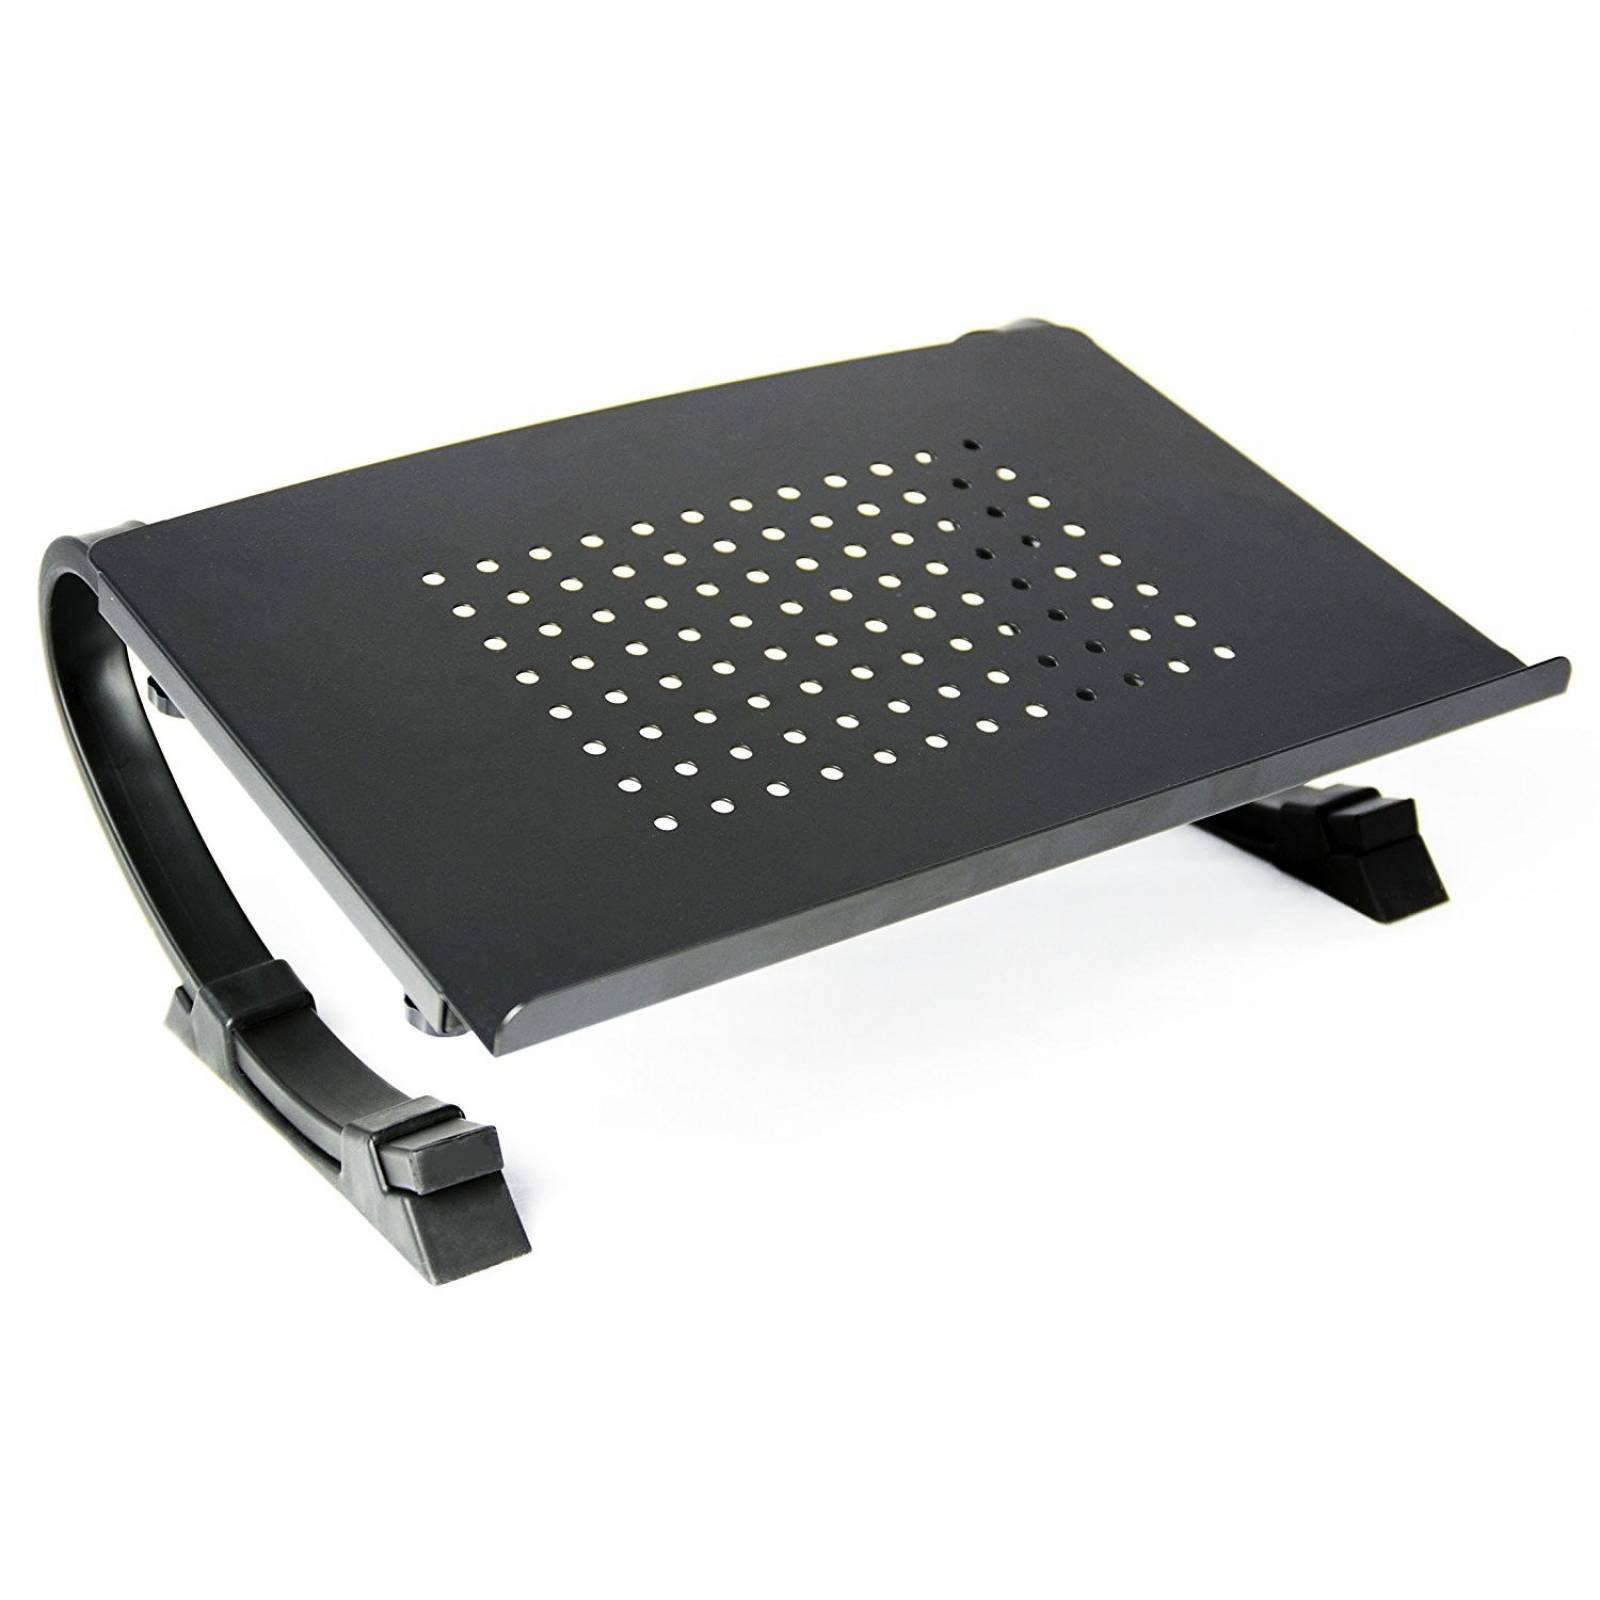 Base Laptop Stand Vivo Acero/aluminio Curvo Ajustable 16